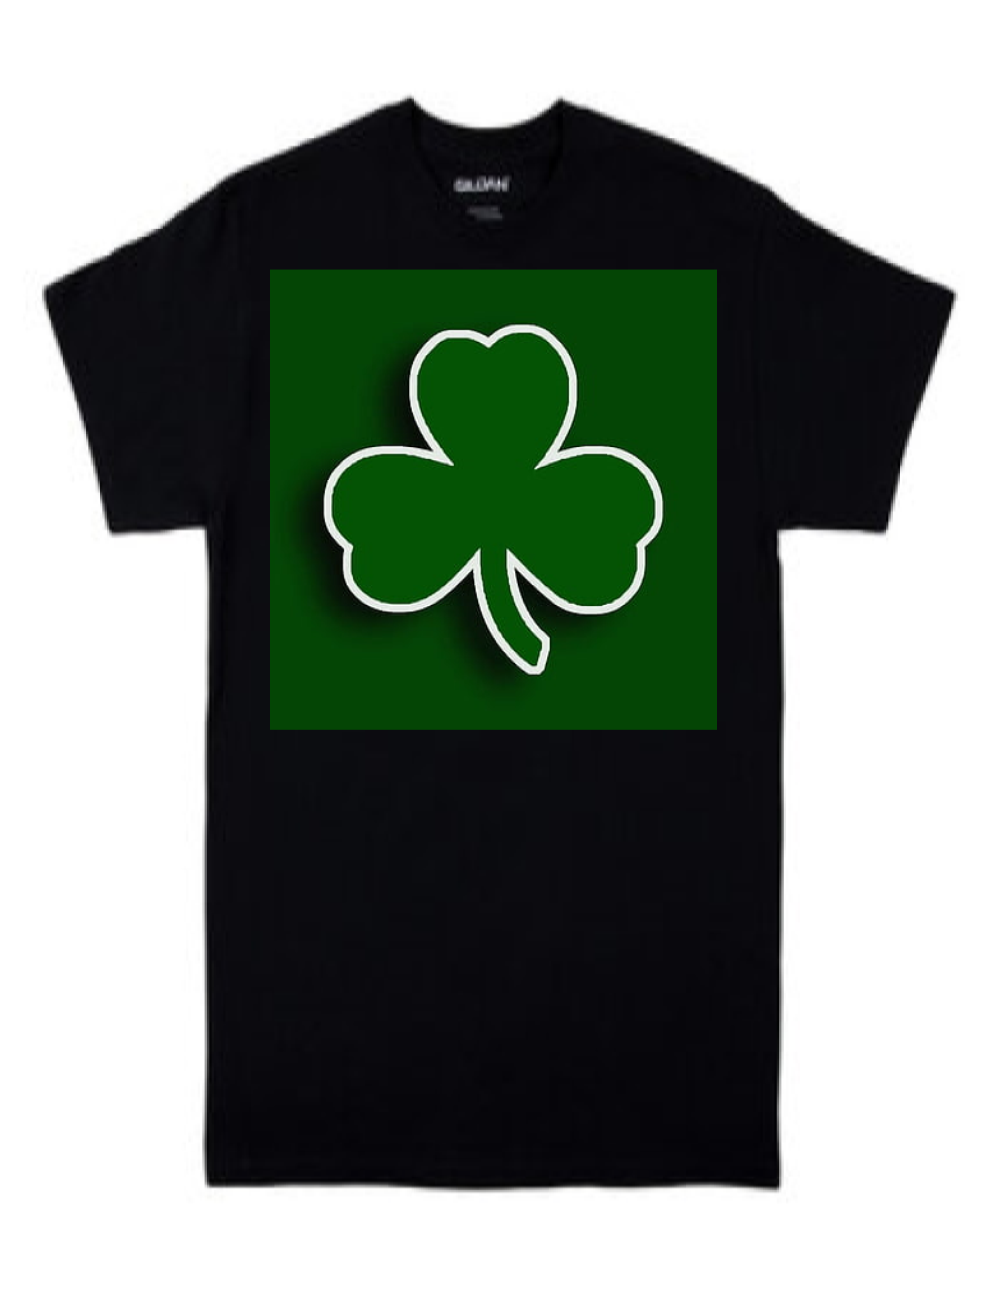 B. Celtics Basketball Adult & Youth T-shirts